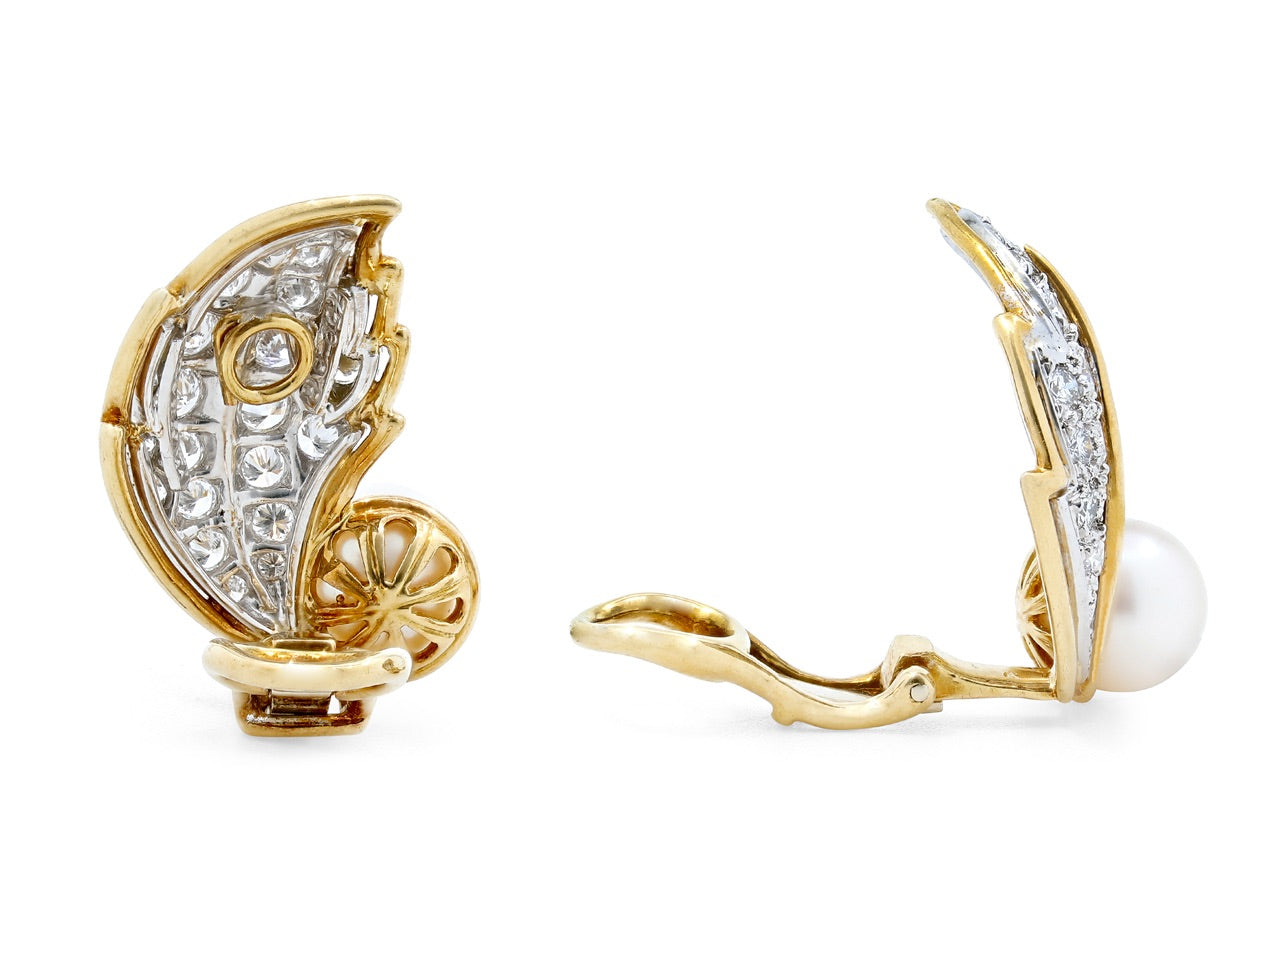 Hammerman Brothers Diamond and Pearl Leaf Earrings in 18K Gold